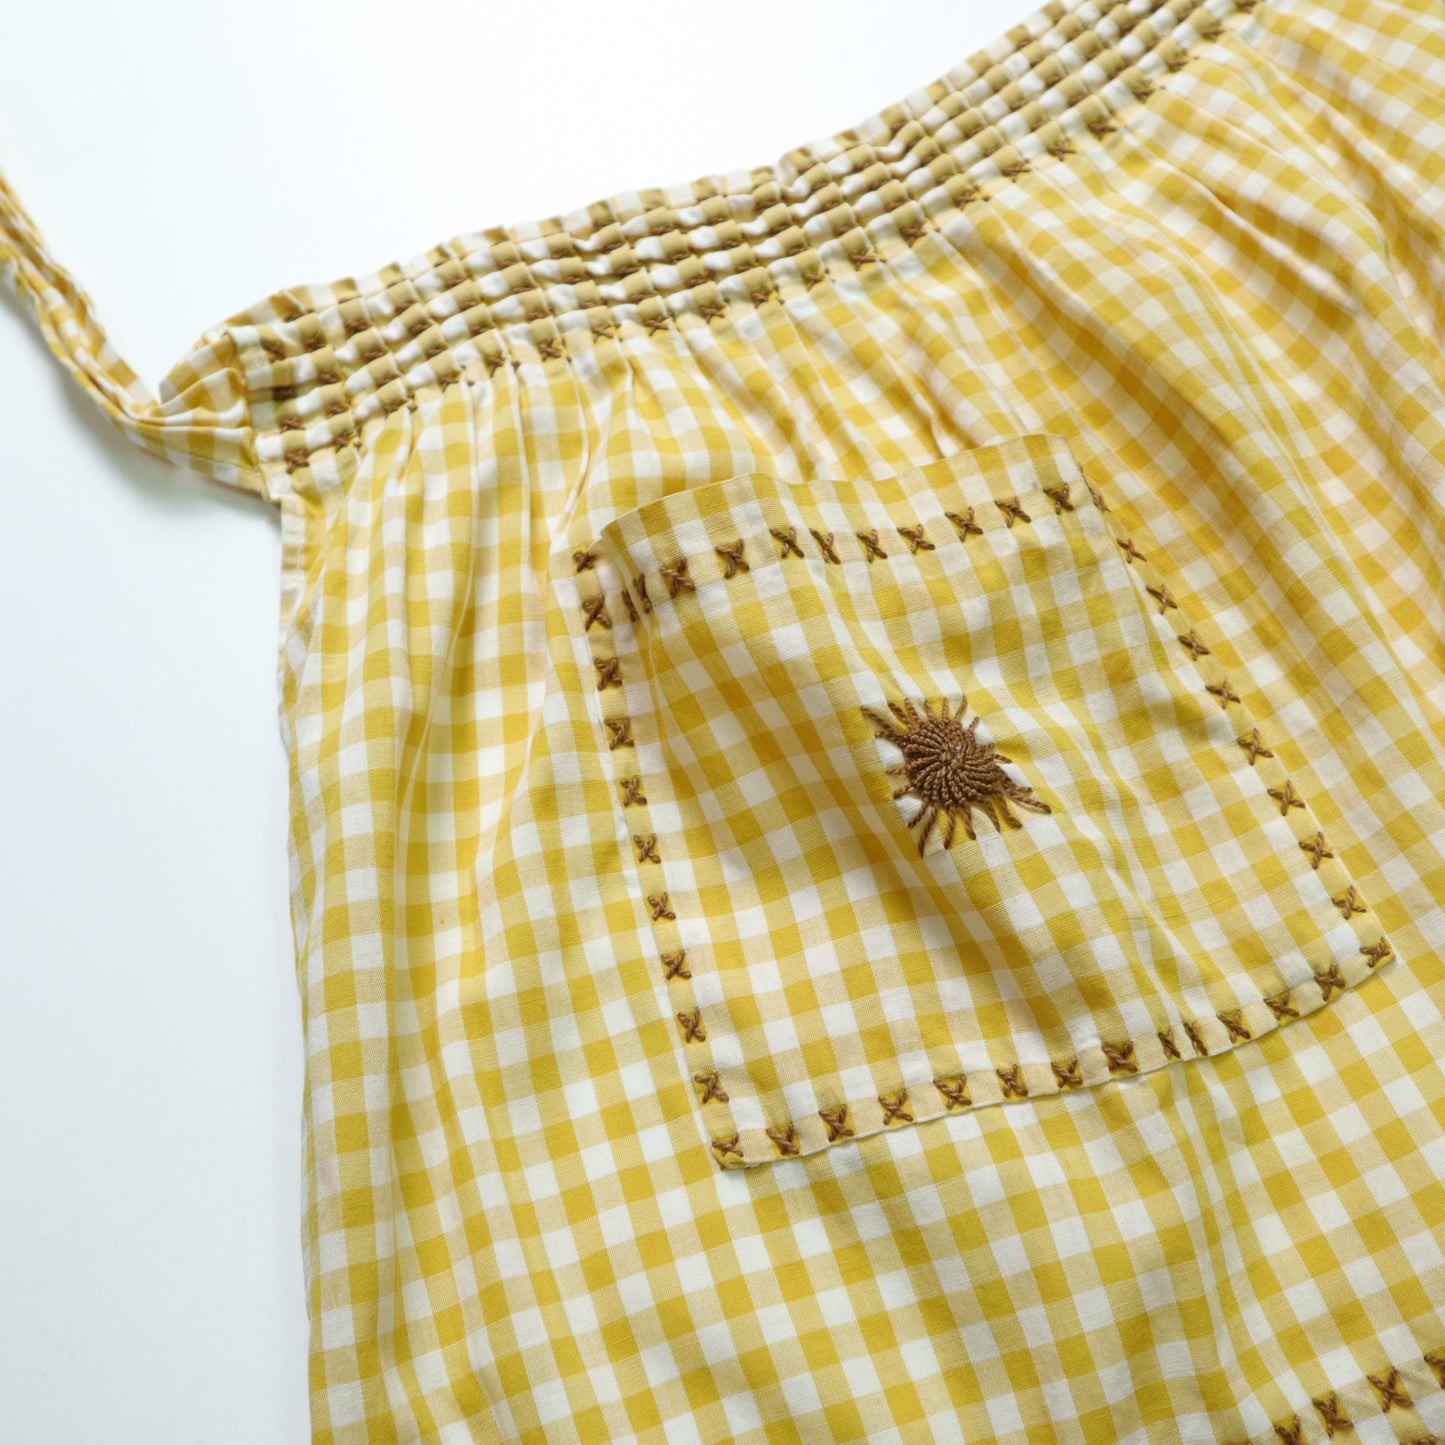 Handmade Apron 黃白格紋手工刺繡圍裙 古著半圍裙